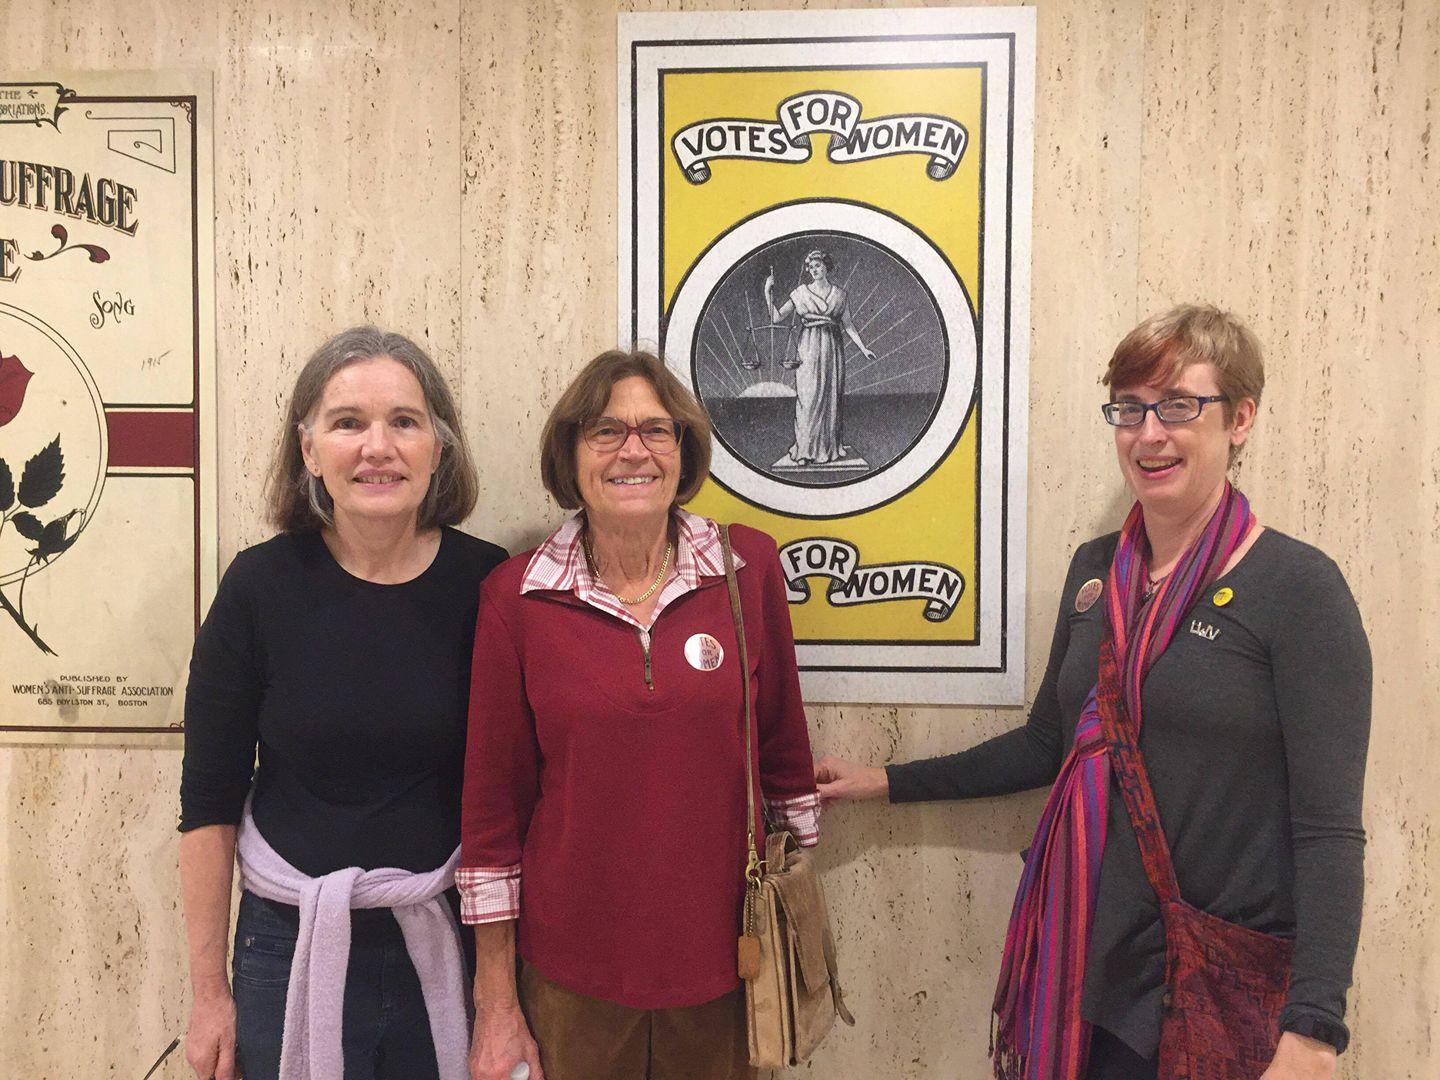 LWV Geneva members tour Women's Suffrage exhibit in Albany, NY